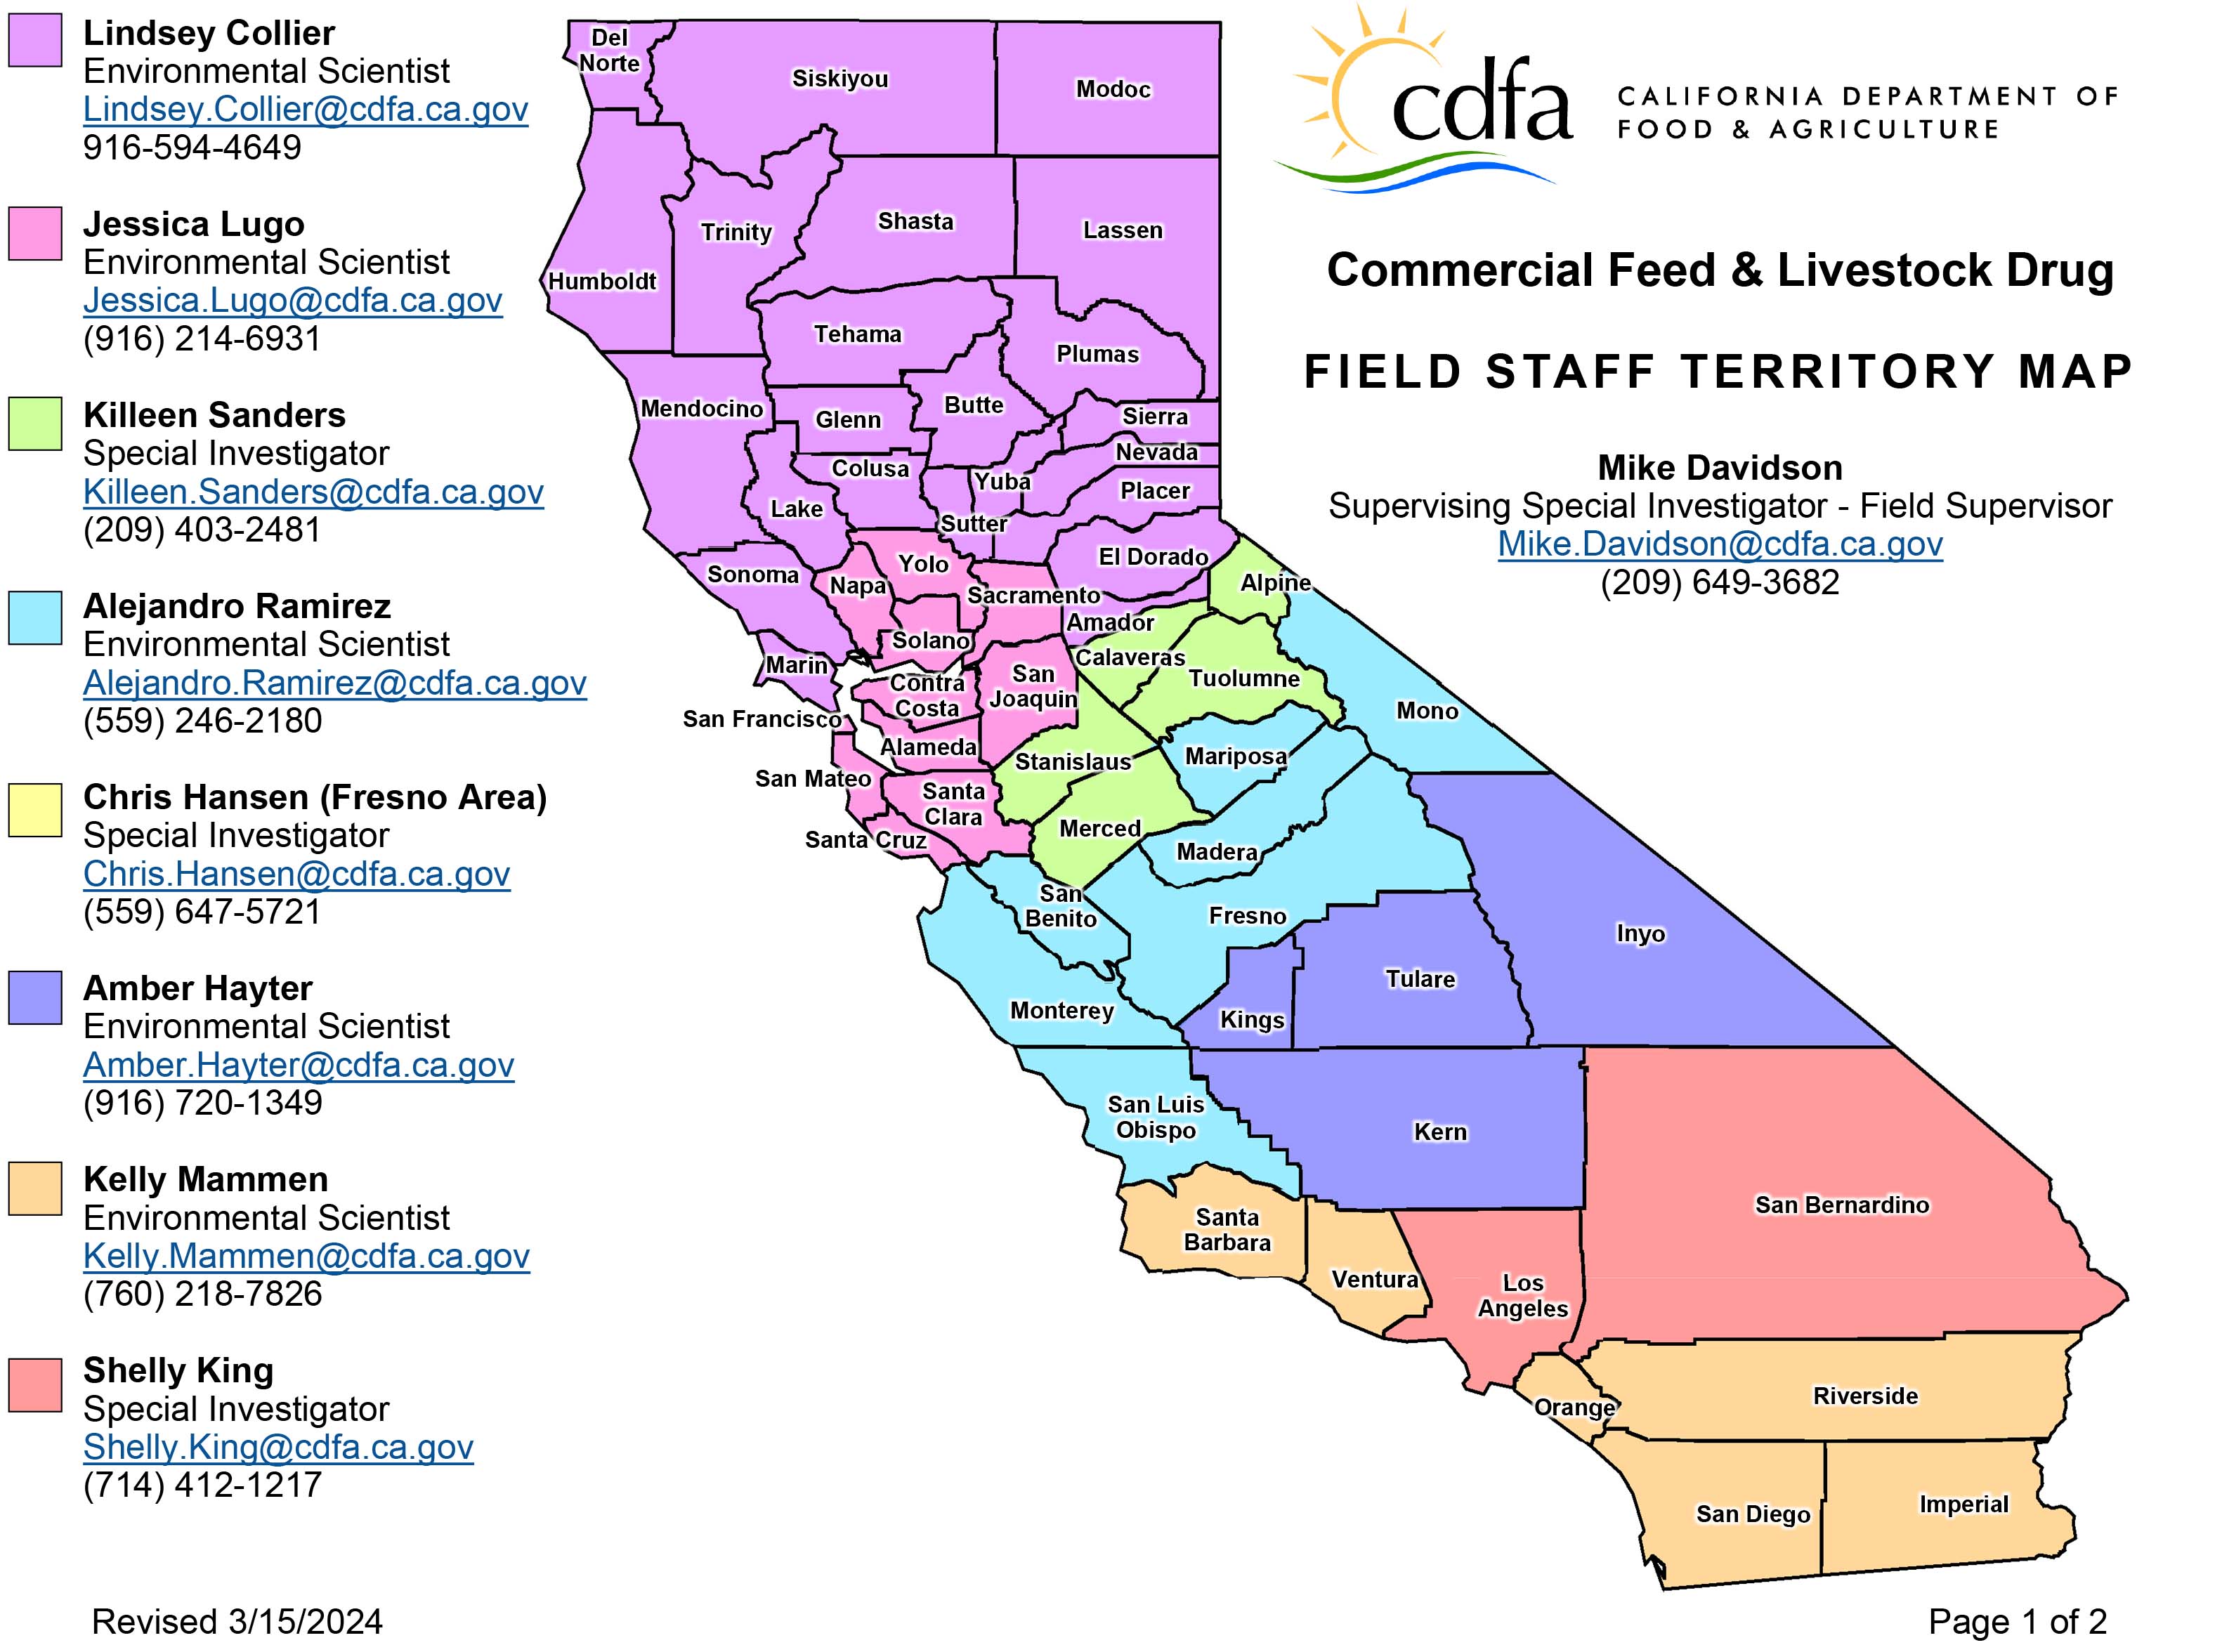 Livestock Drug Field Staff Territory Map